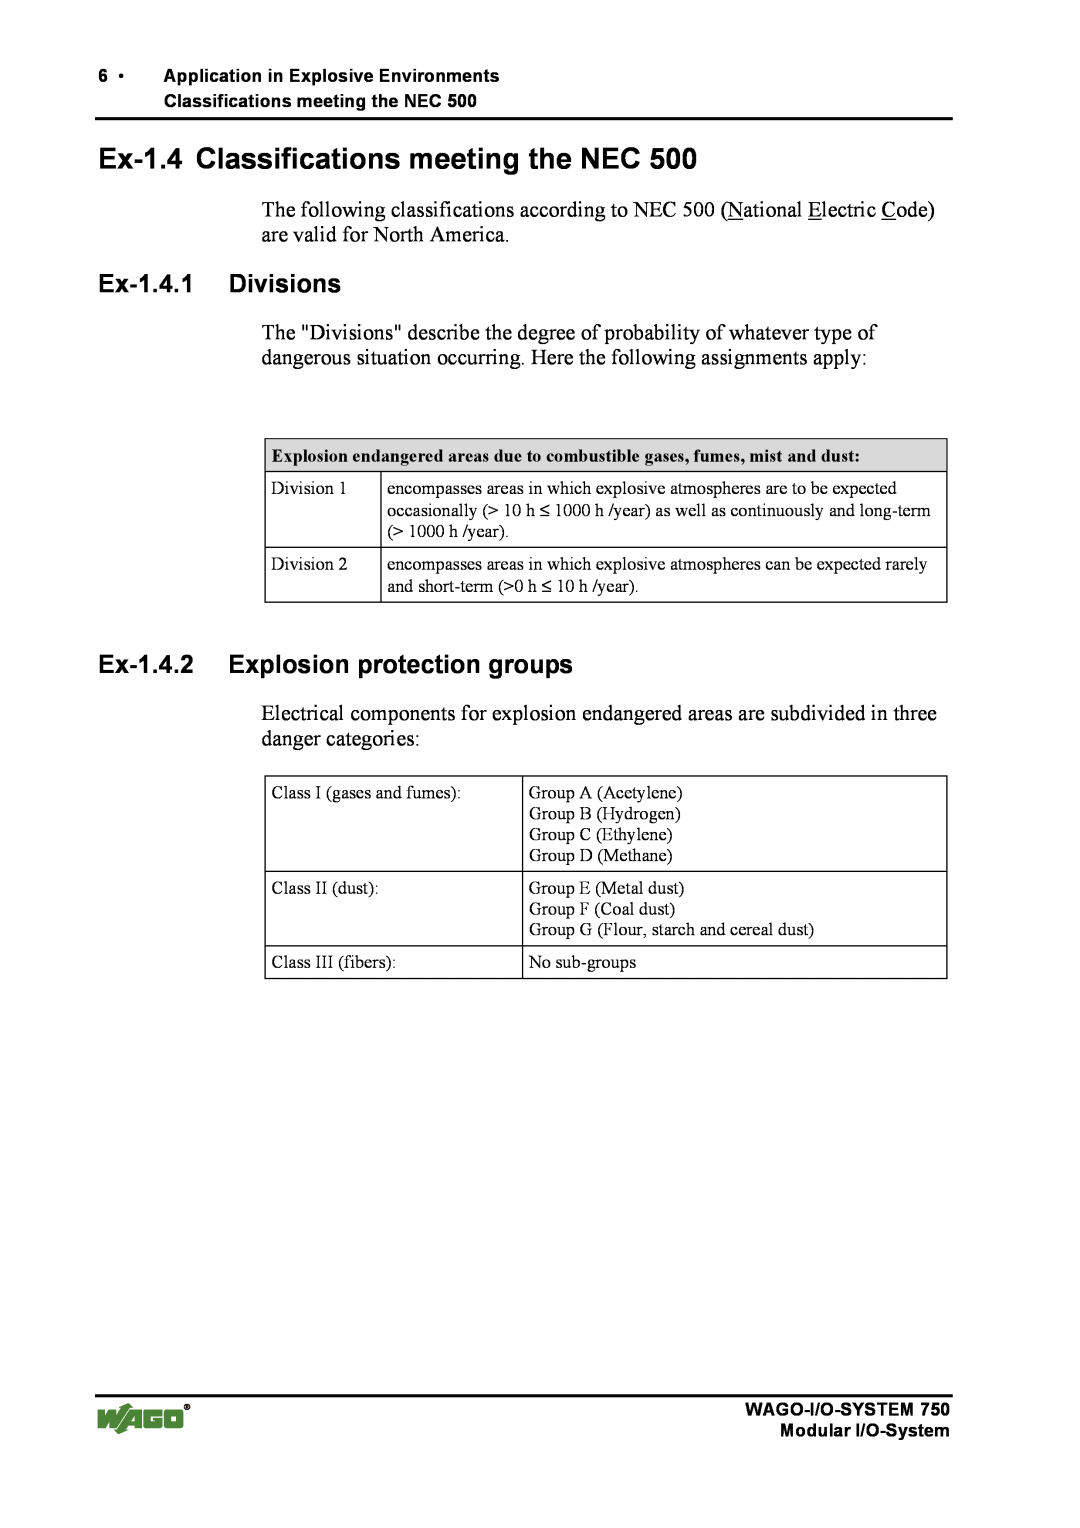 Quatech INTERBUS S manual Ex-1.4 Classifications meeting the NEC, Ex-1.4.1 Divisions, Ex-1.4.2 Explosion protection groups 